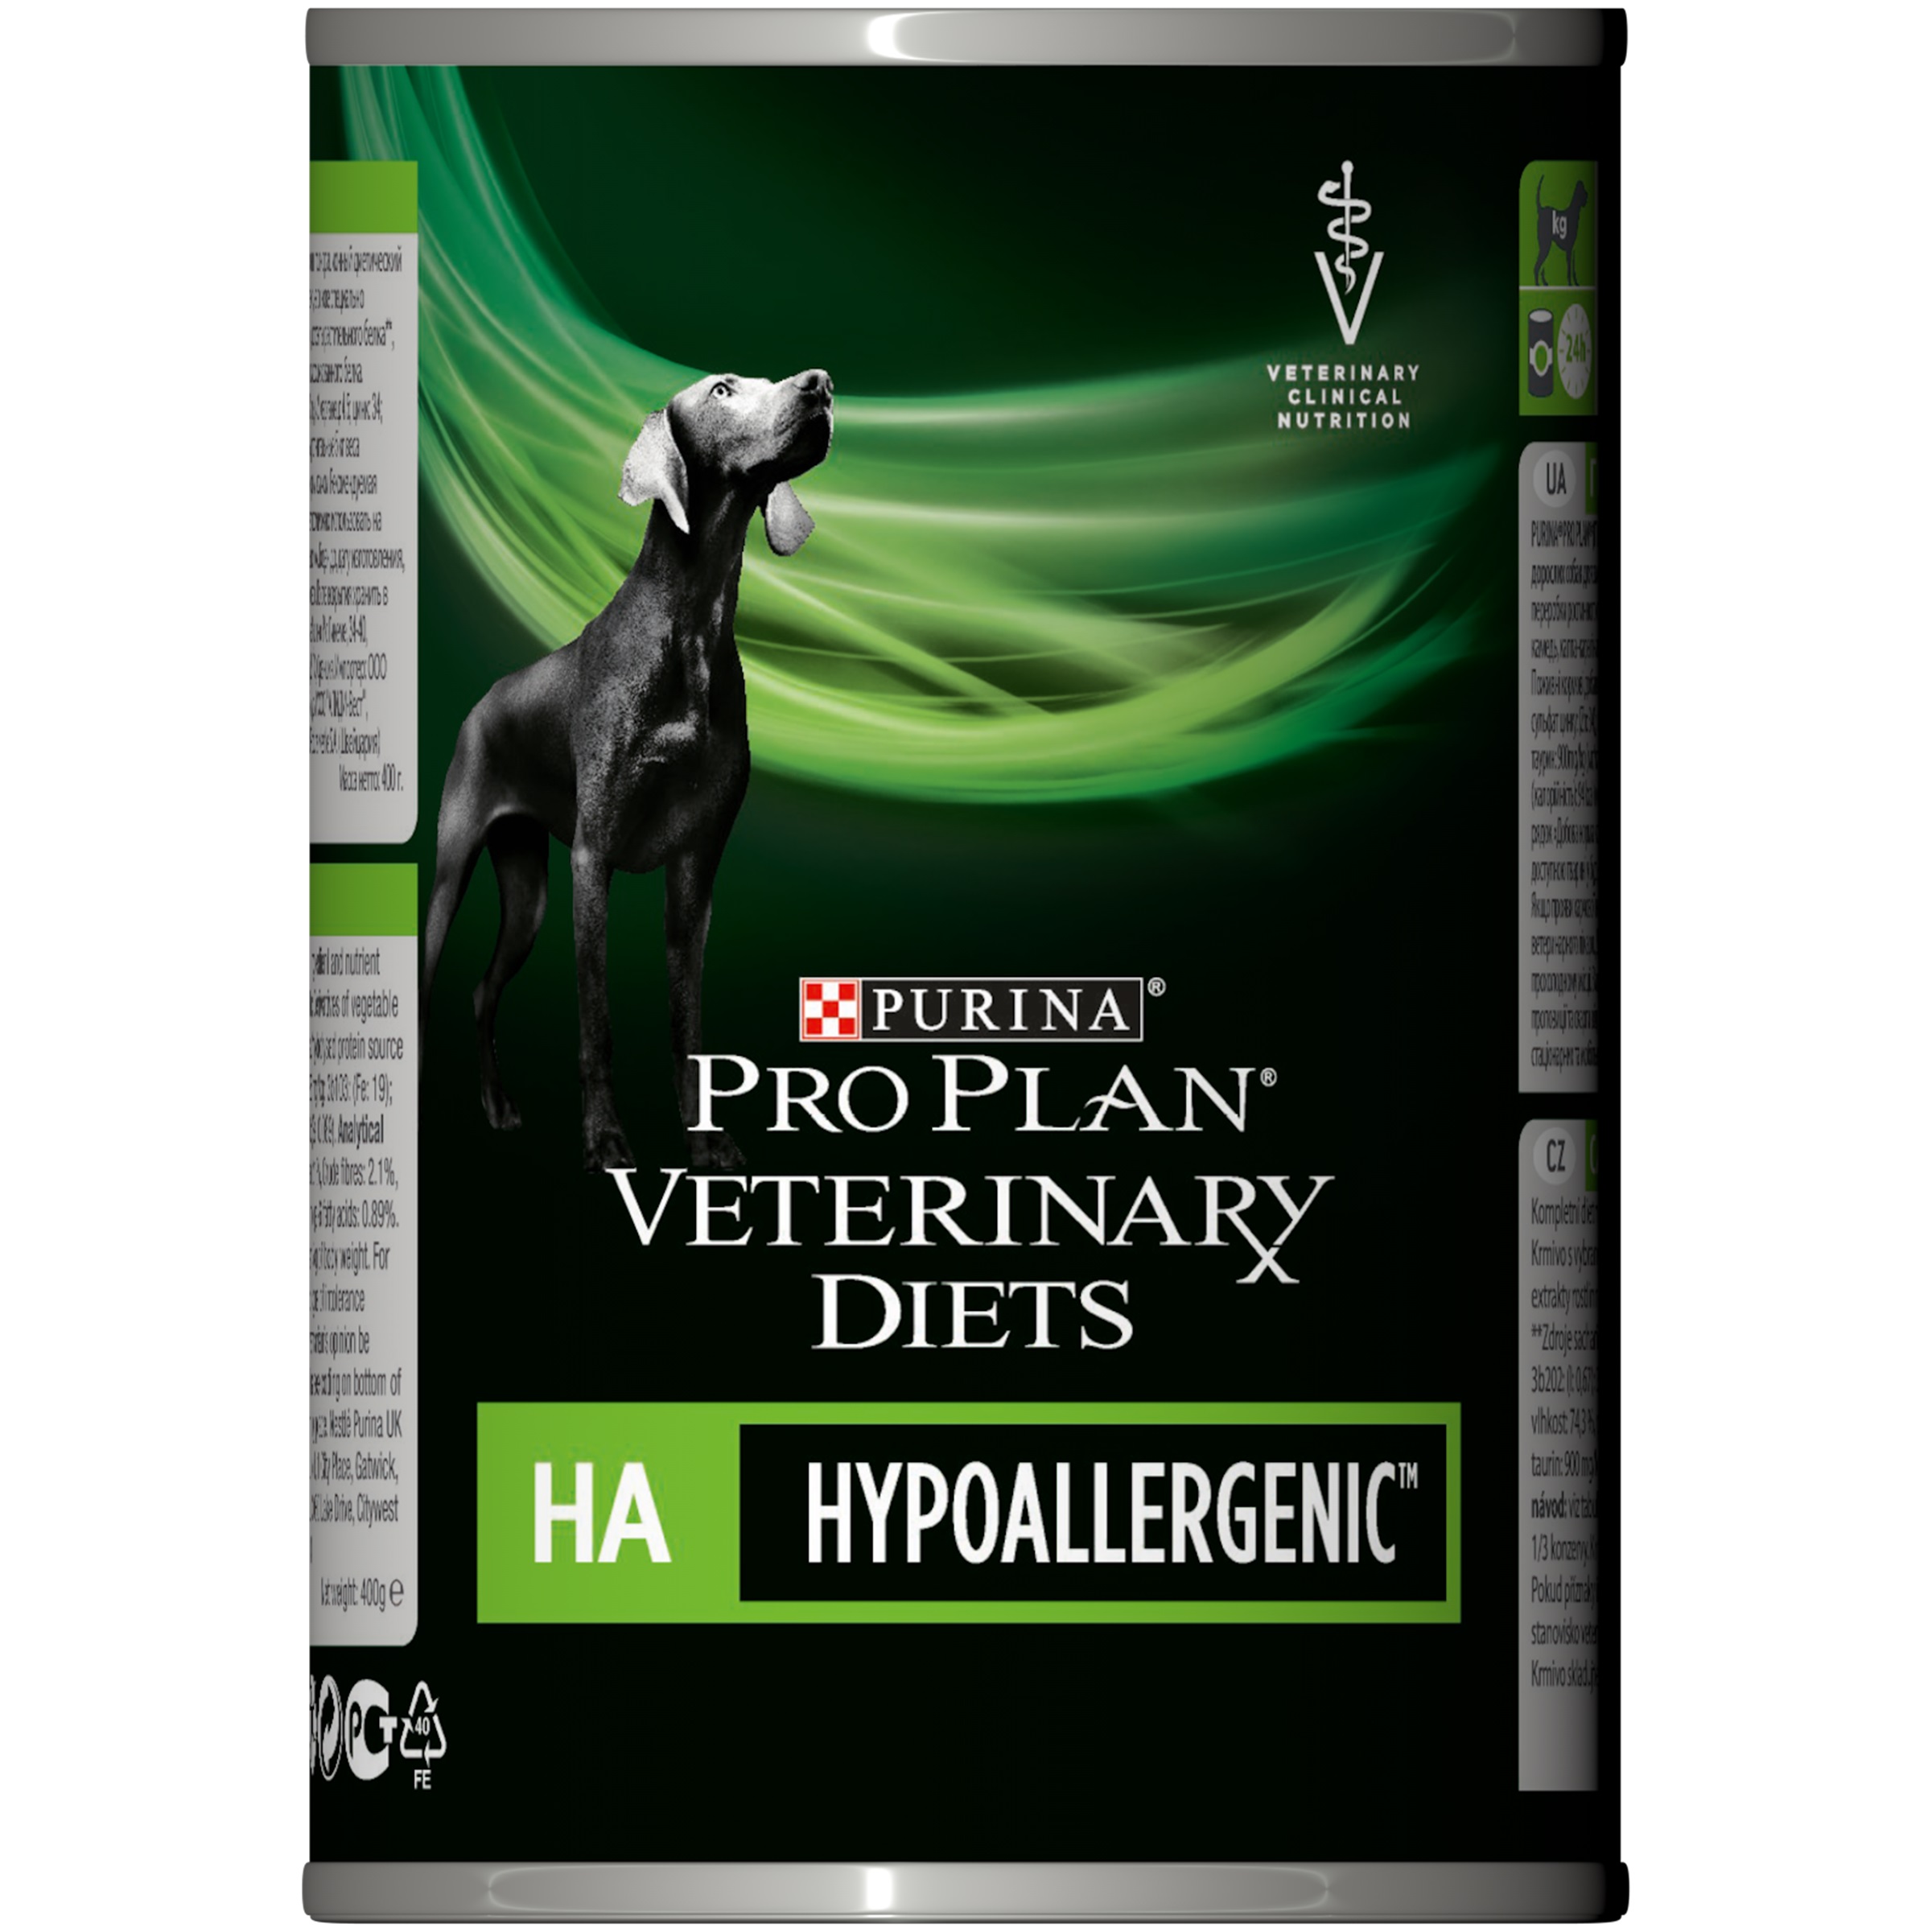 Pro plan аллергия. Pro Plan Veterinary Diets ha Hypoallergenic для собак. Pro Plan ha Hypoallergenic для собак. Purina Pro Plan Veterinary Diets Hypoallergenic. Pro Plan Veterinary Diets для собак ha.